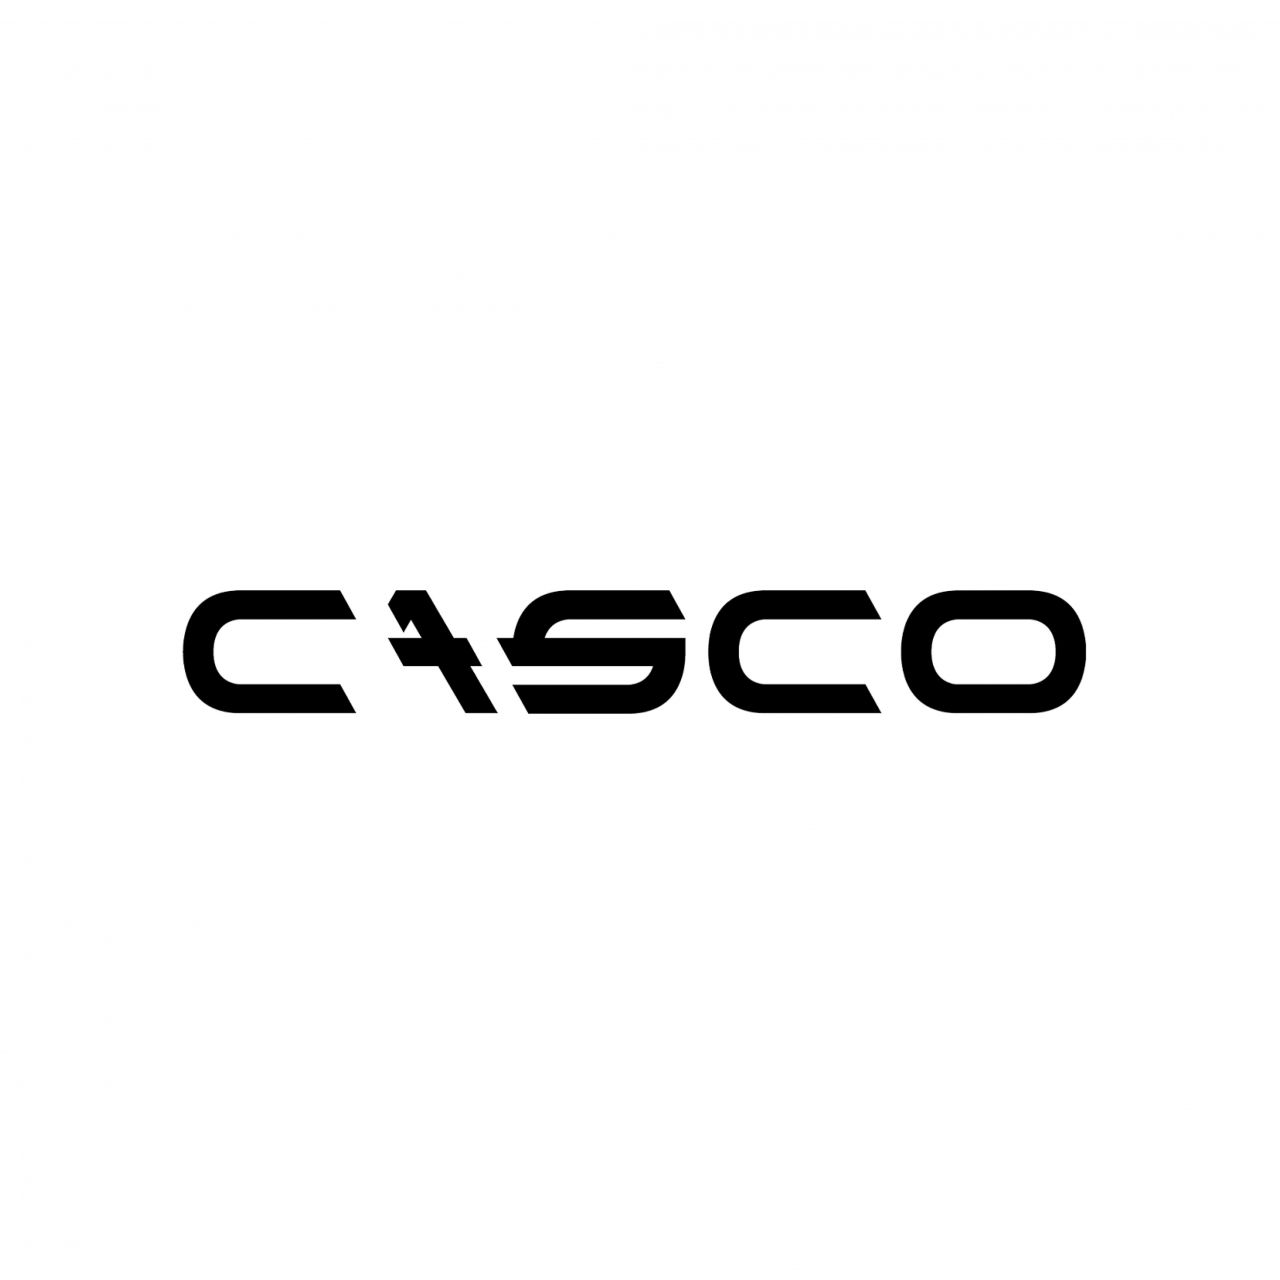 Casco Motors